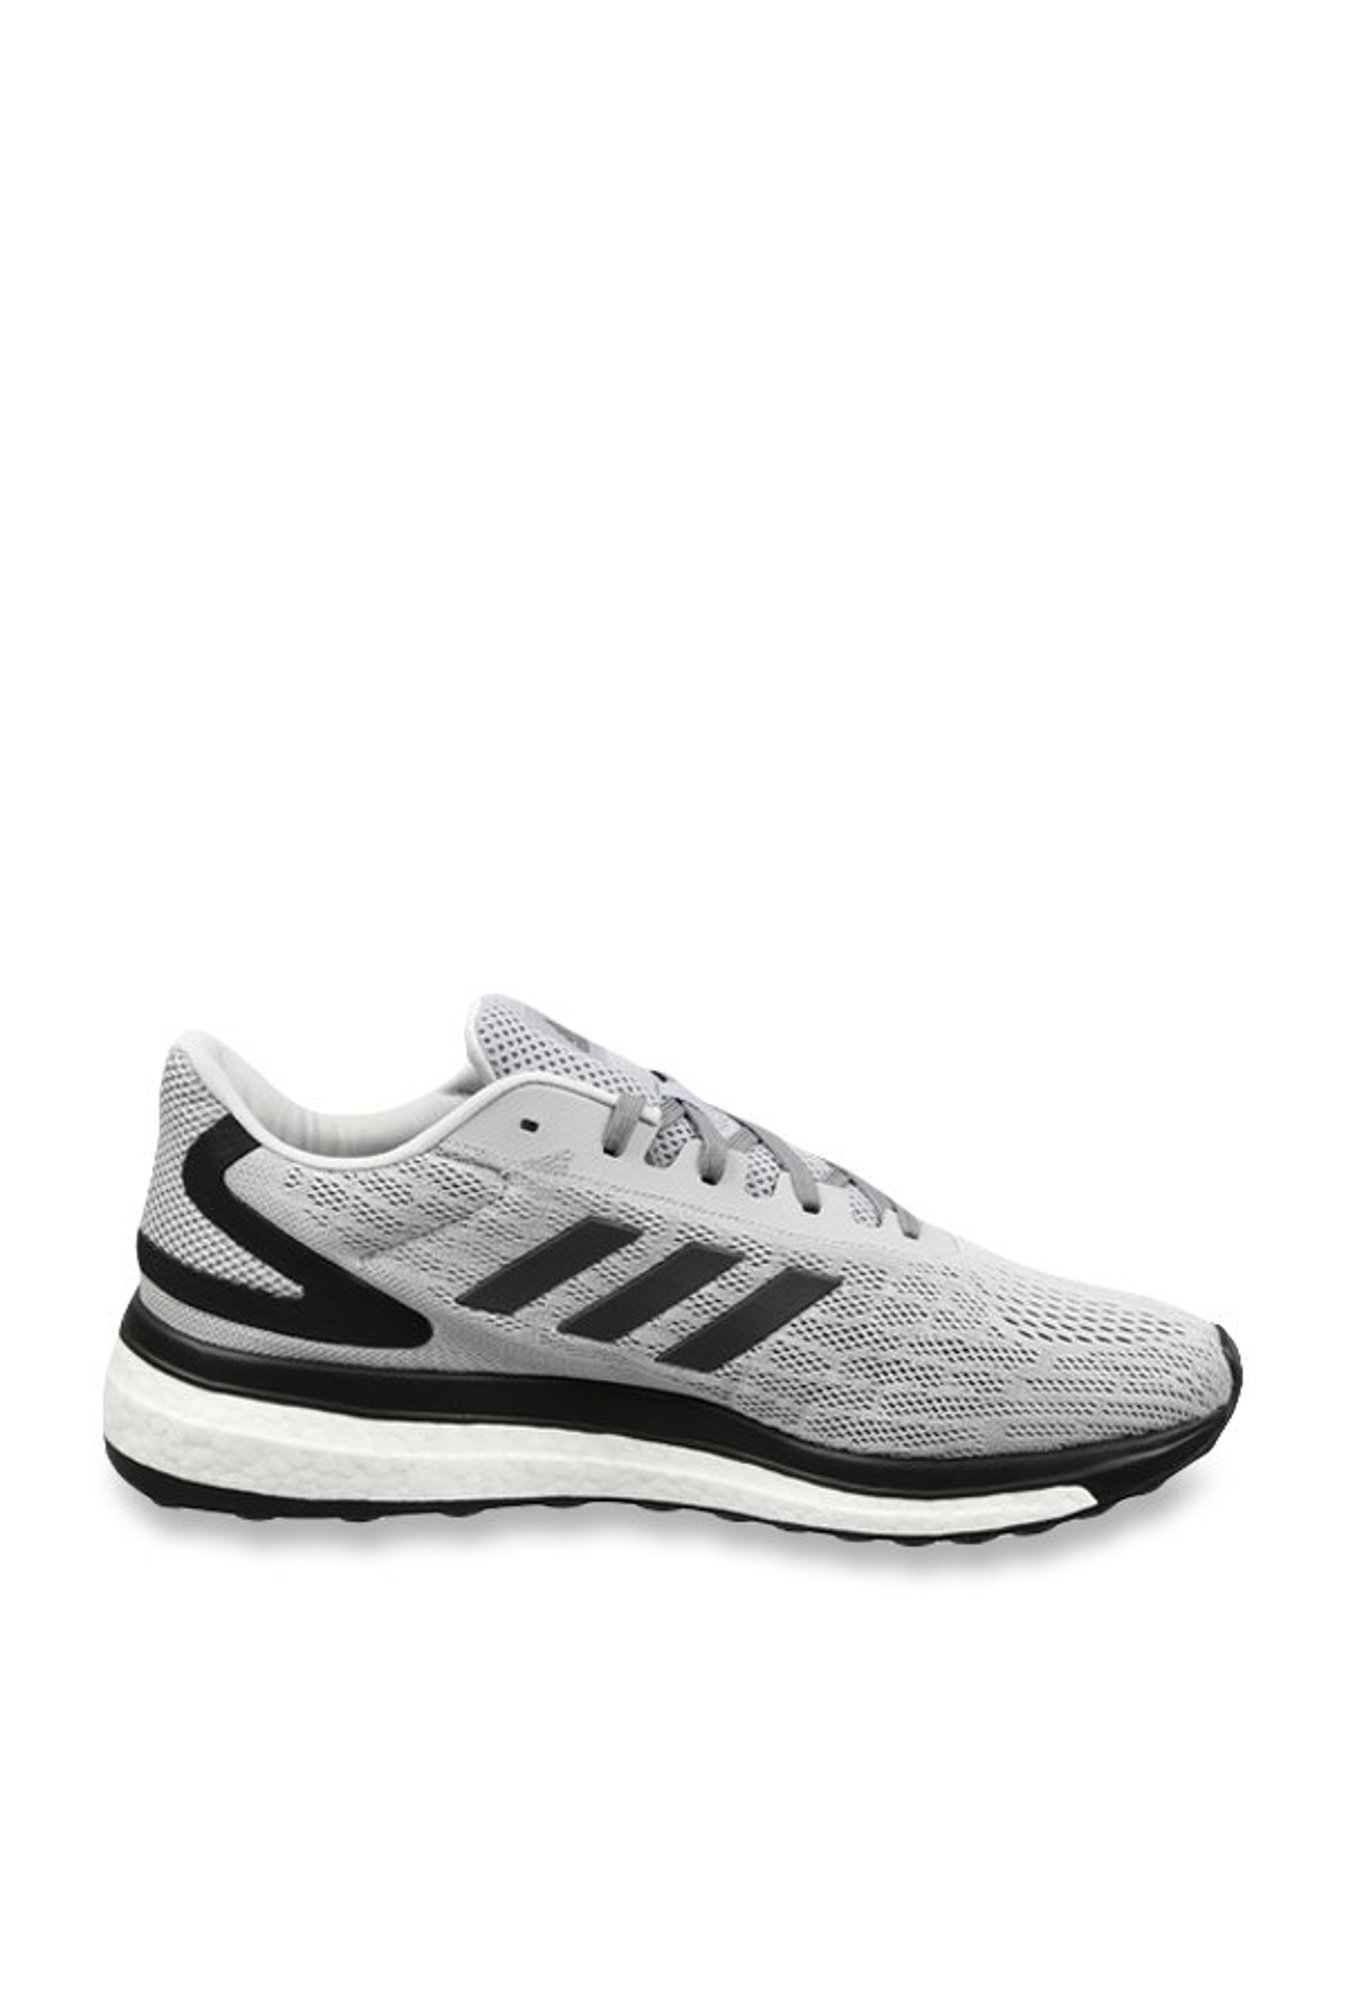 adidas response running shoes